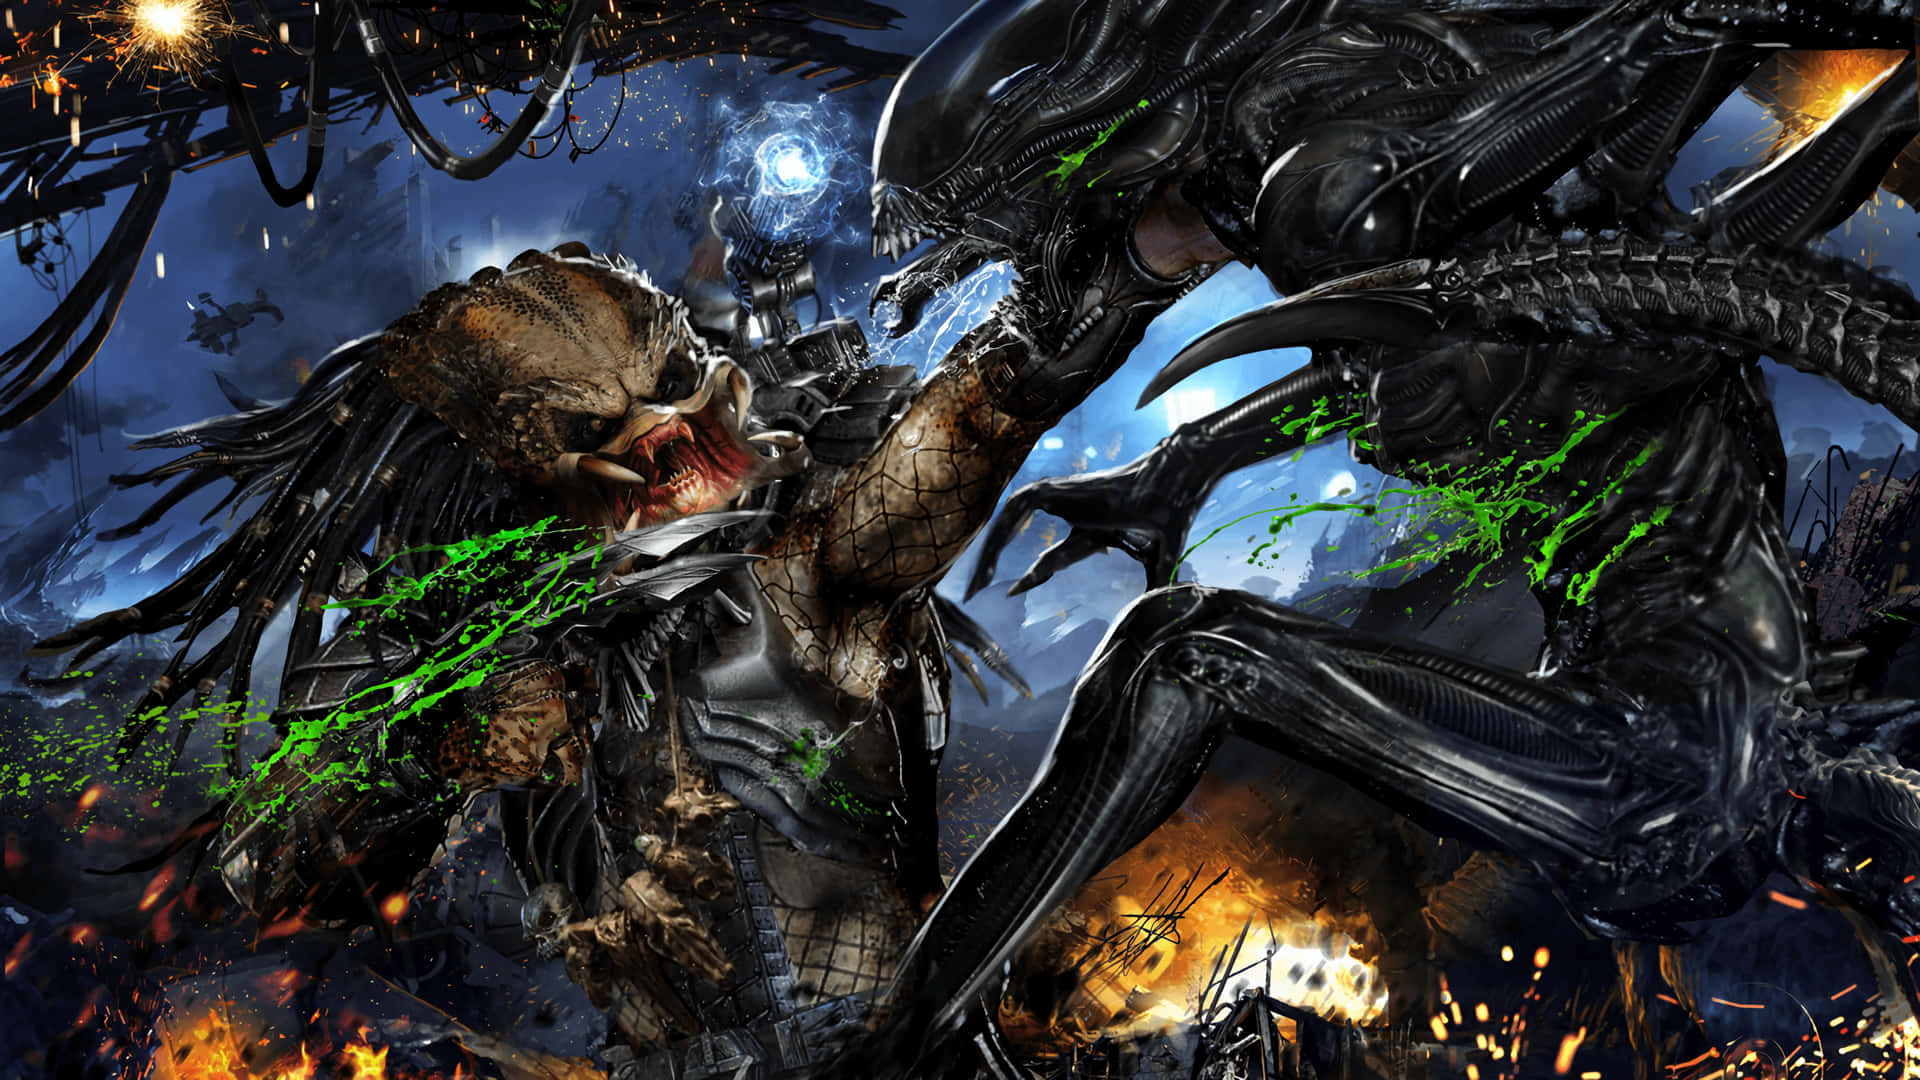 Free Alien Vs Predator Wallpaper Downloads, [100+] Alien Vs Predator  Wallpapers for FREE 